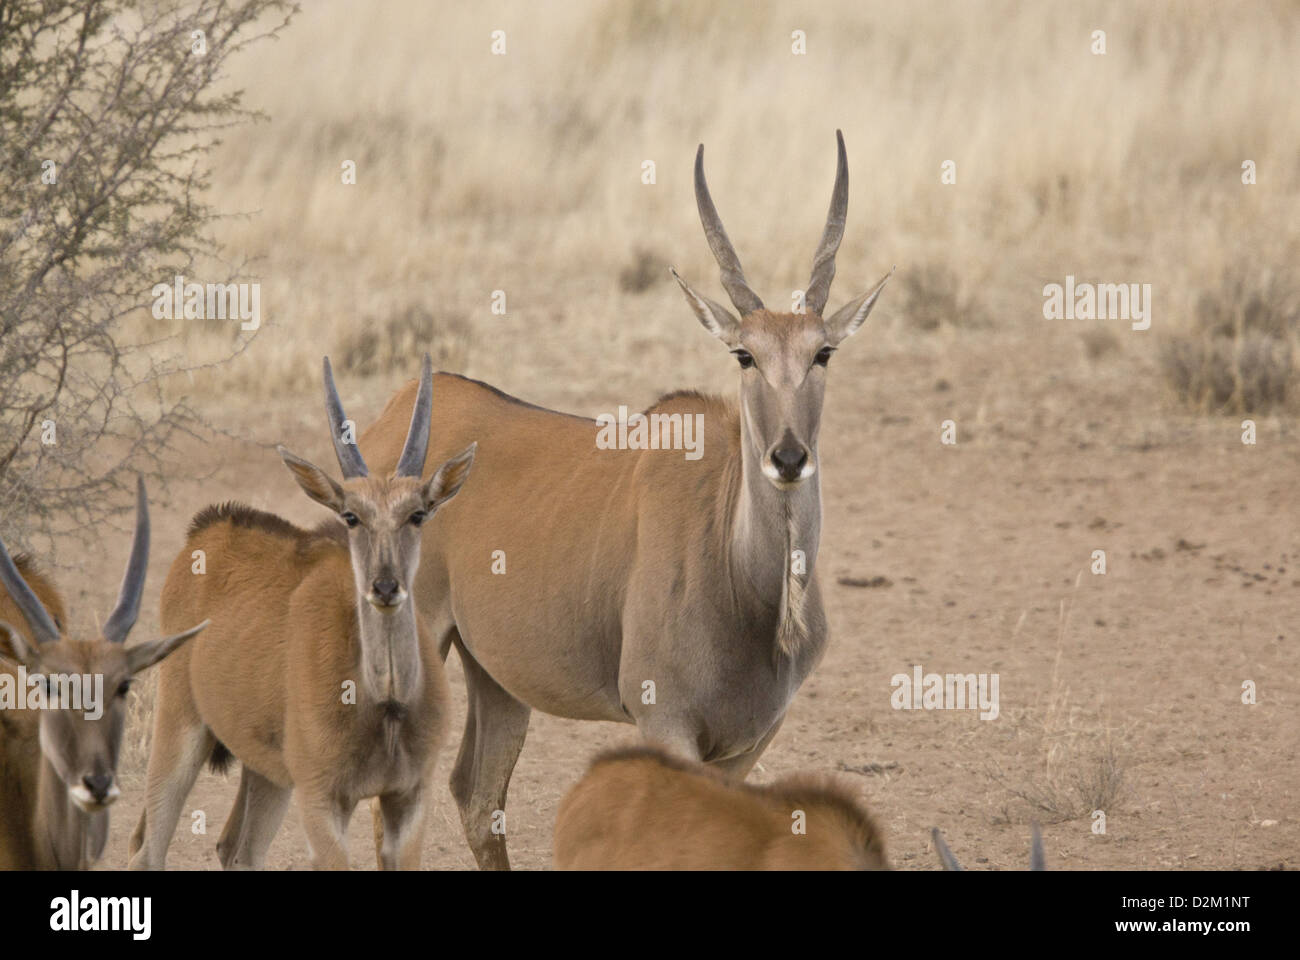 Group of common eland (Taurotragus oryx) Kalahari desert, South Africa Stock Photo